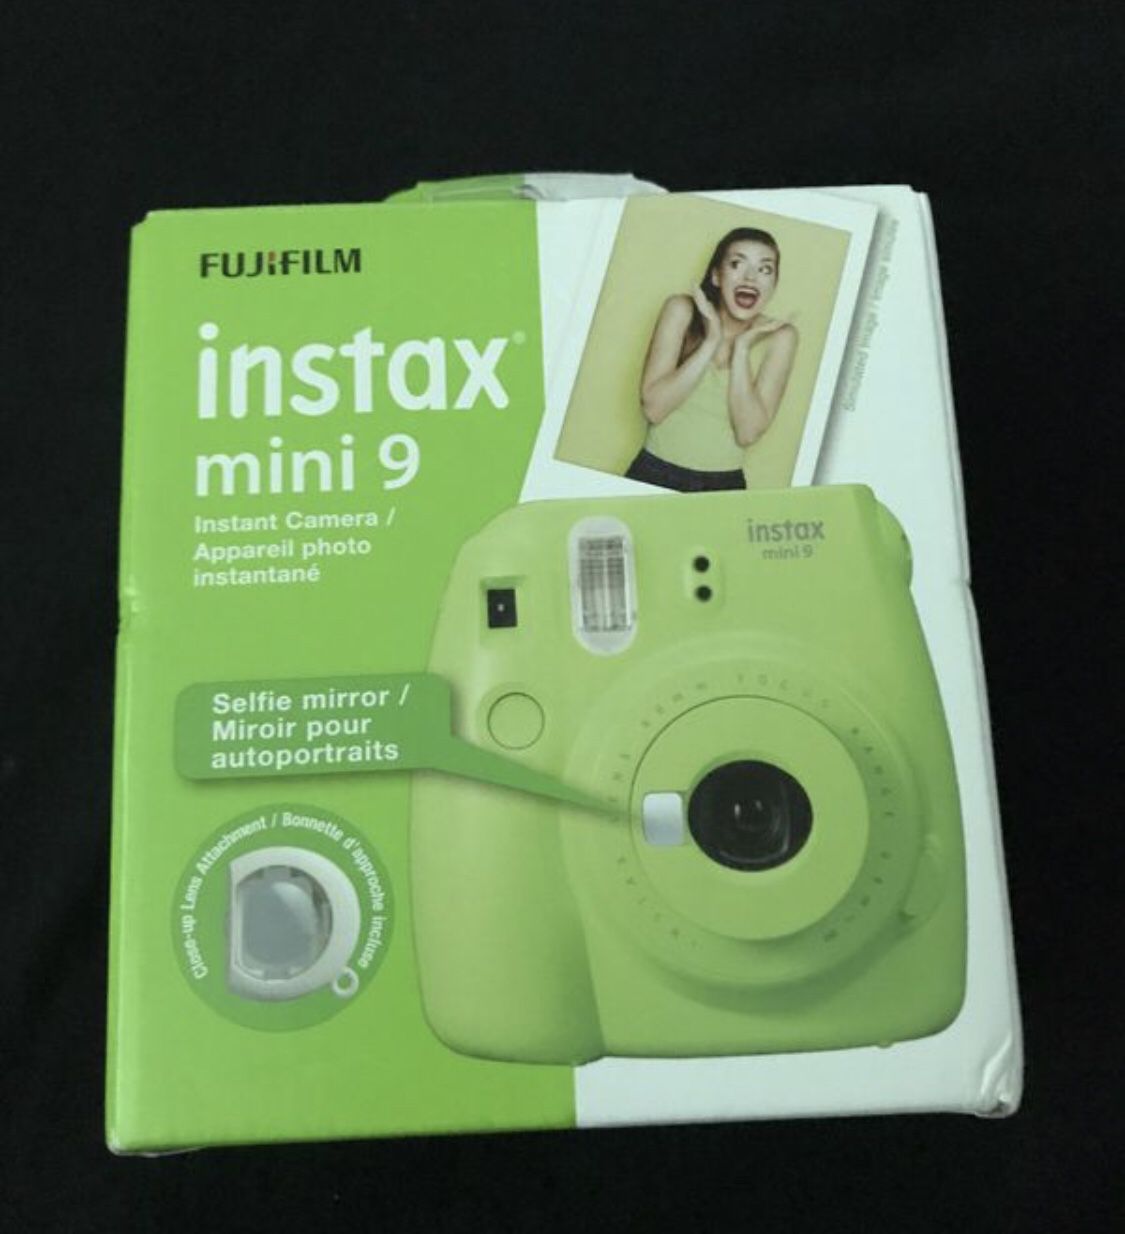 New instax mini 9 instant camera